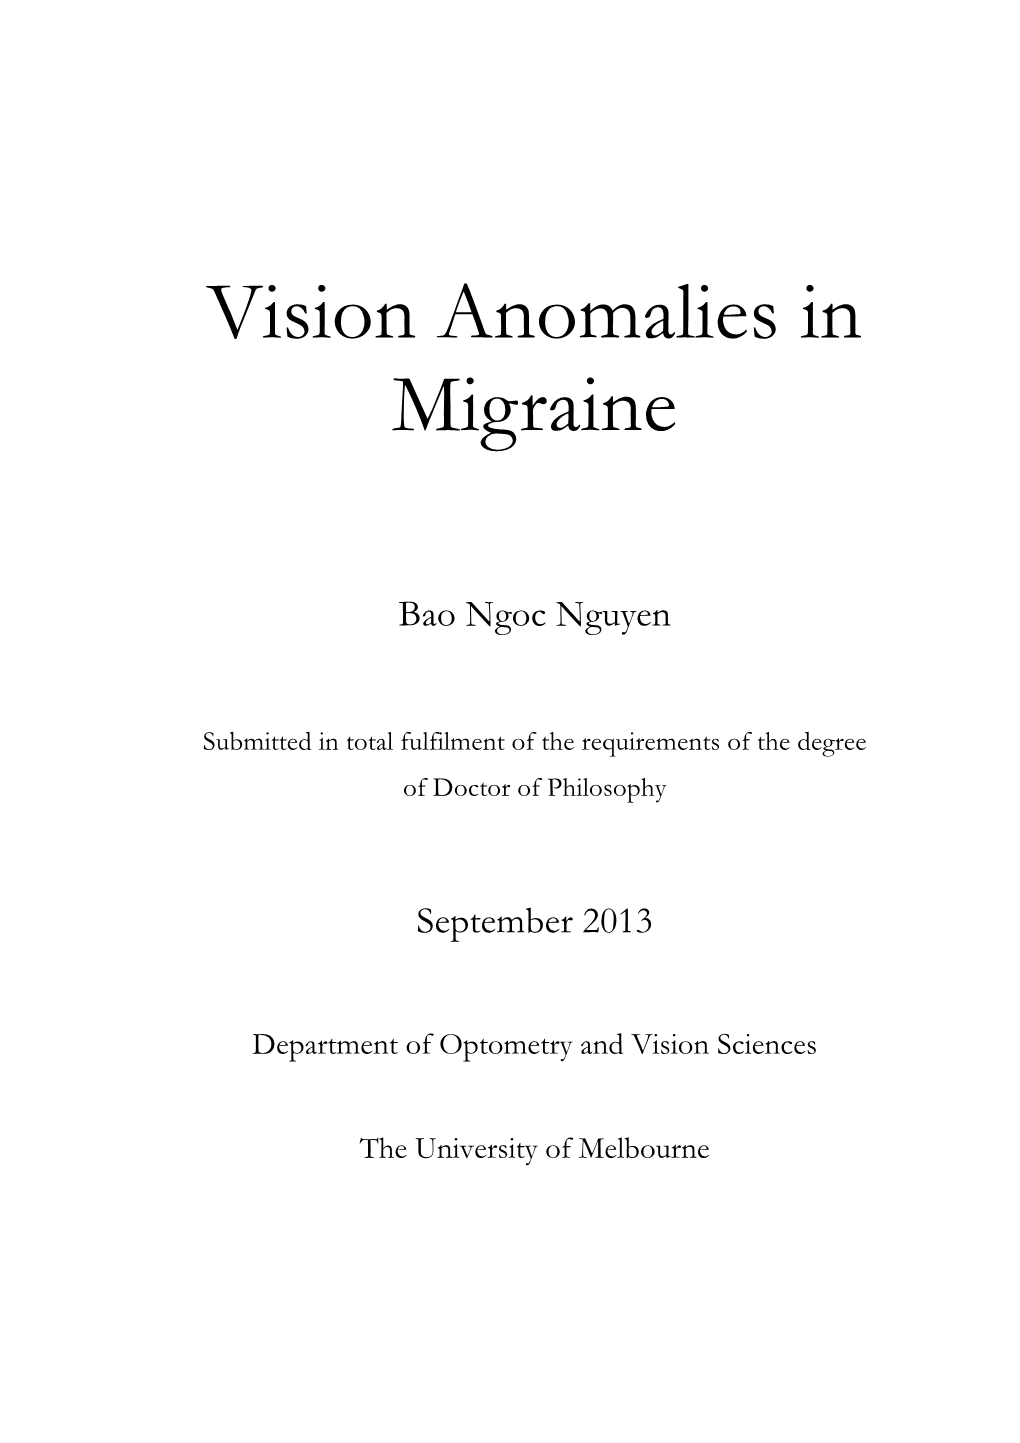 Vision Anomalies in Migraine